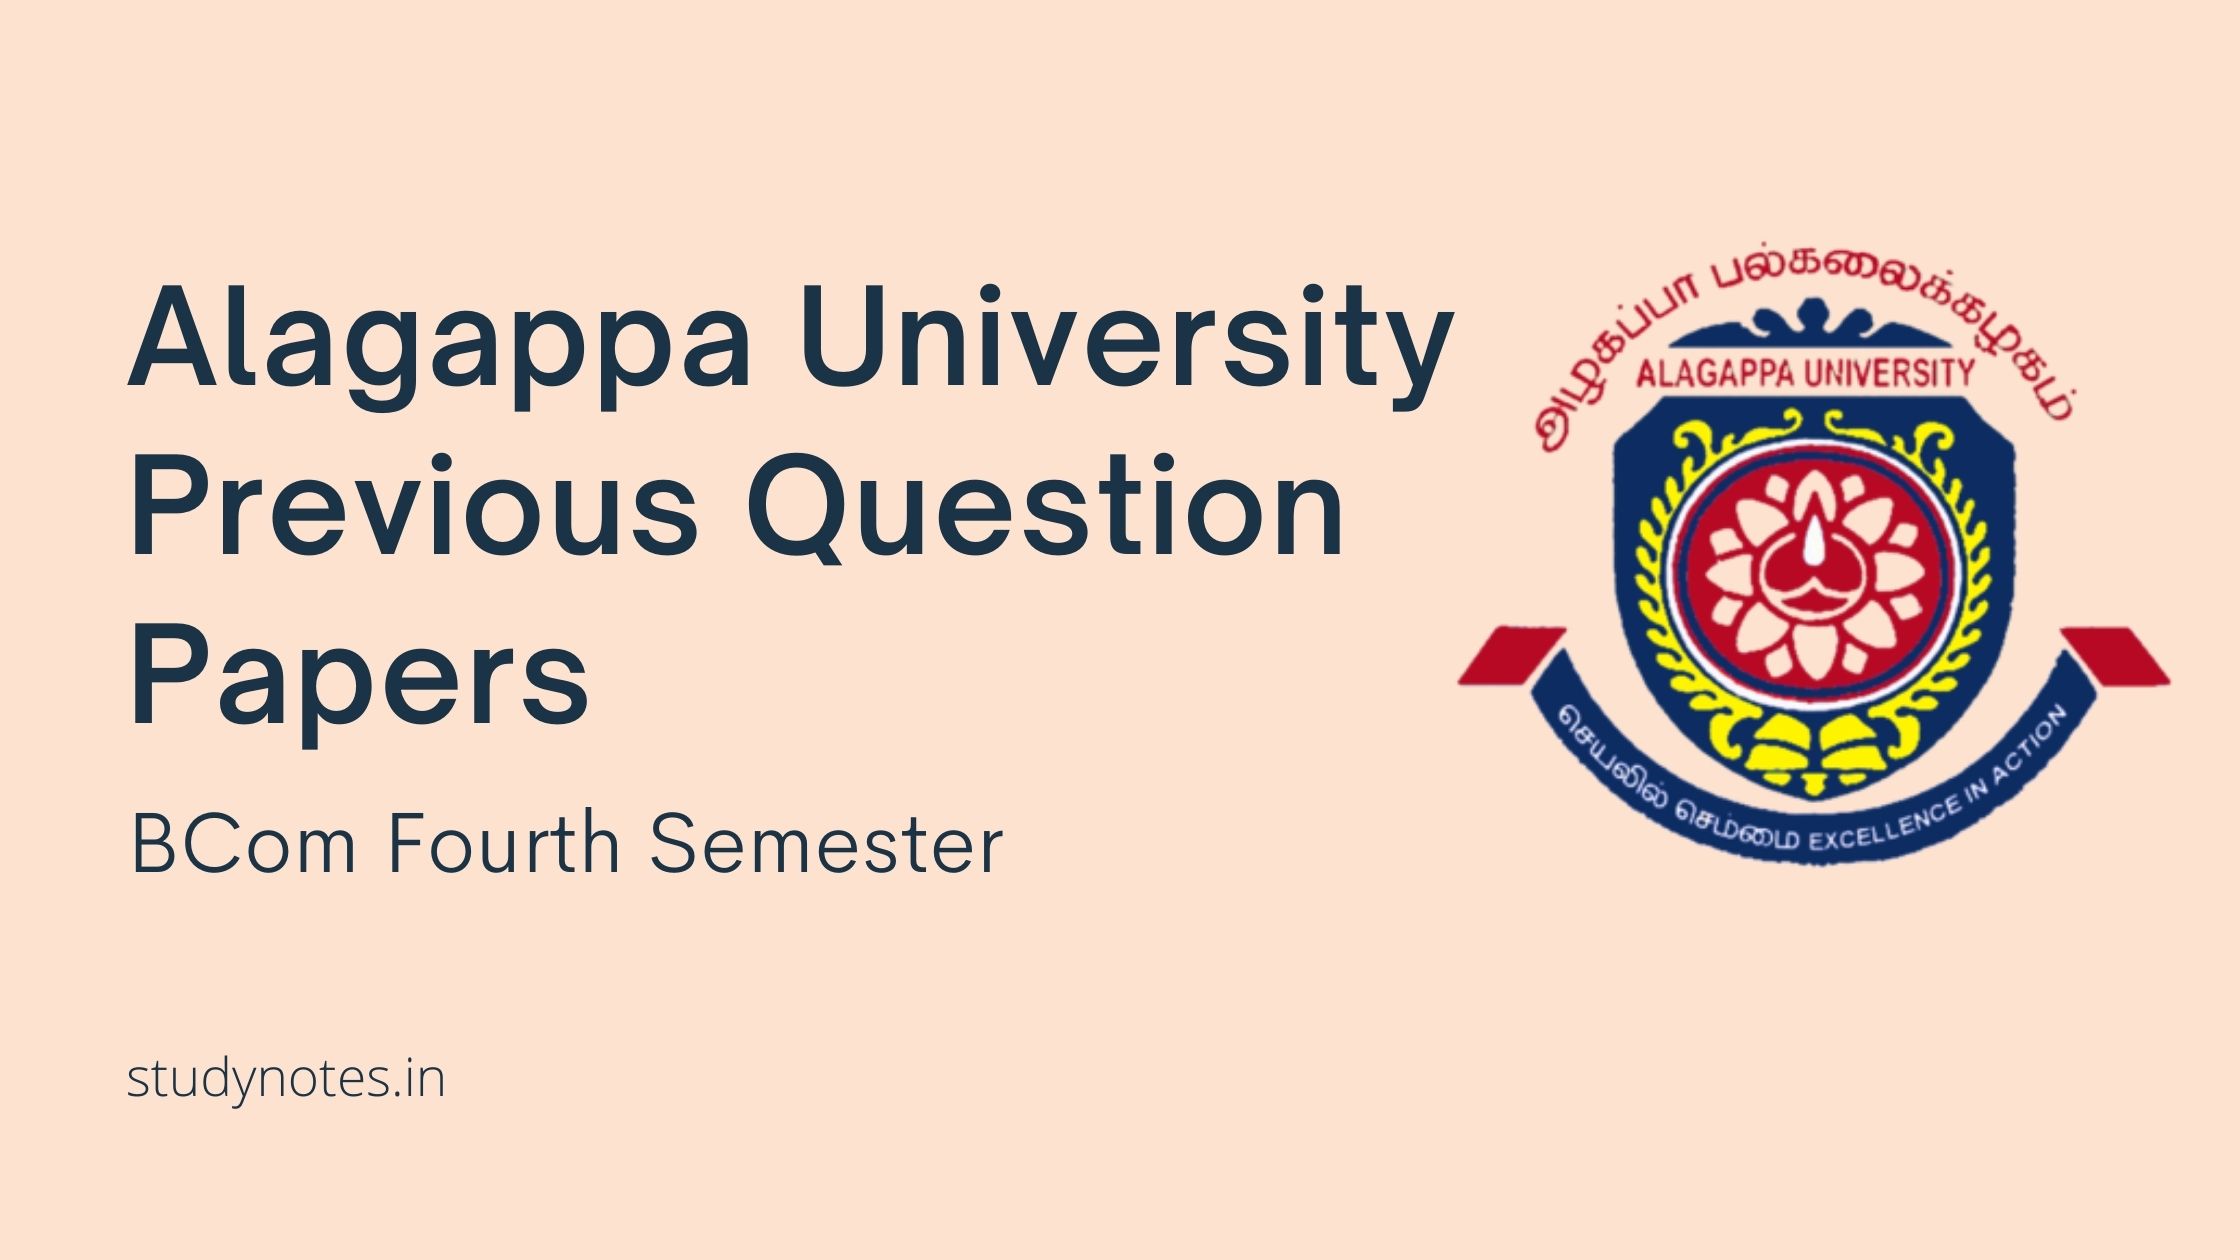 Alagappa University BCom Fourth Semester Previous Question Paper